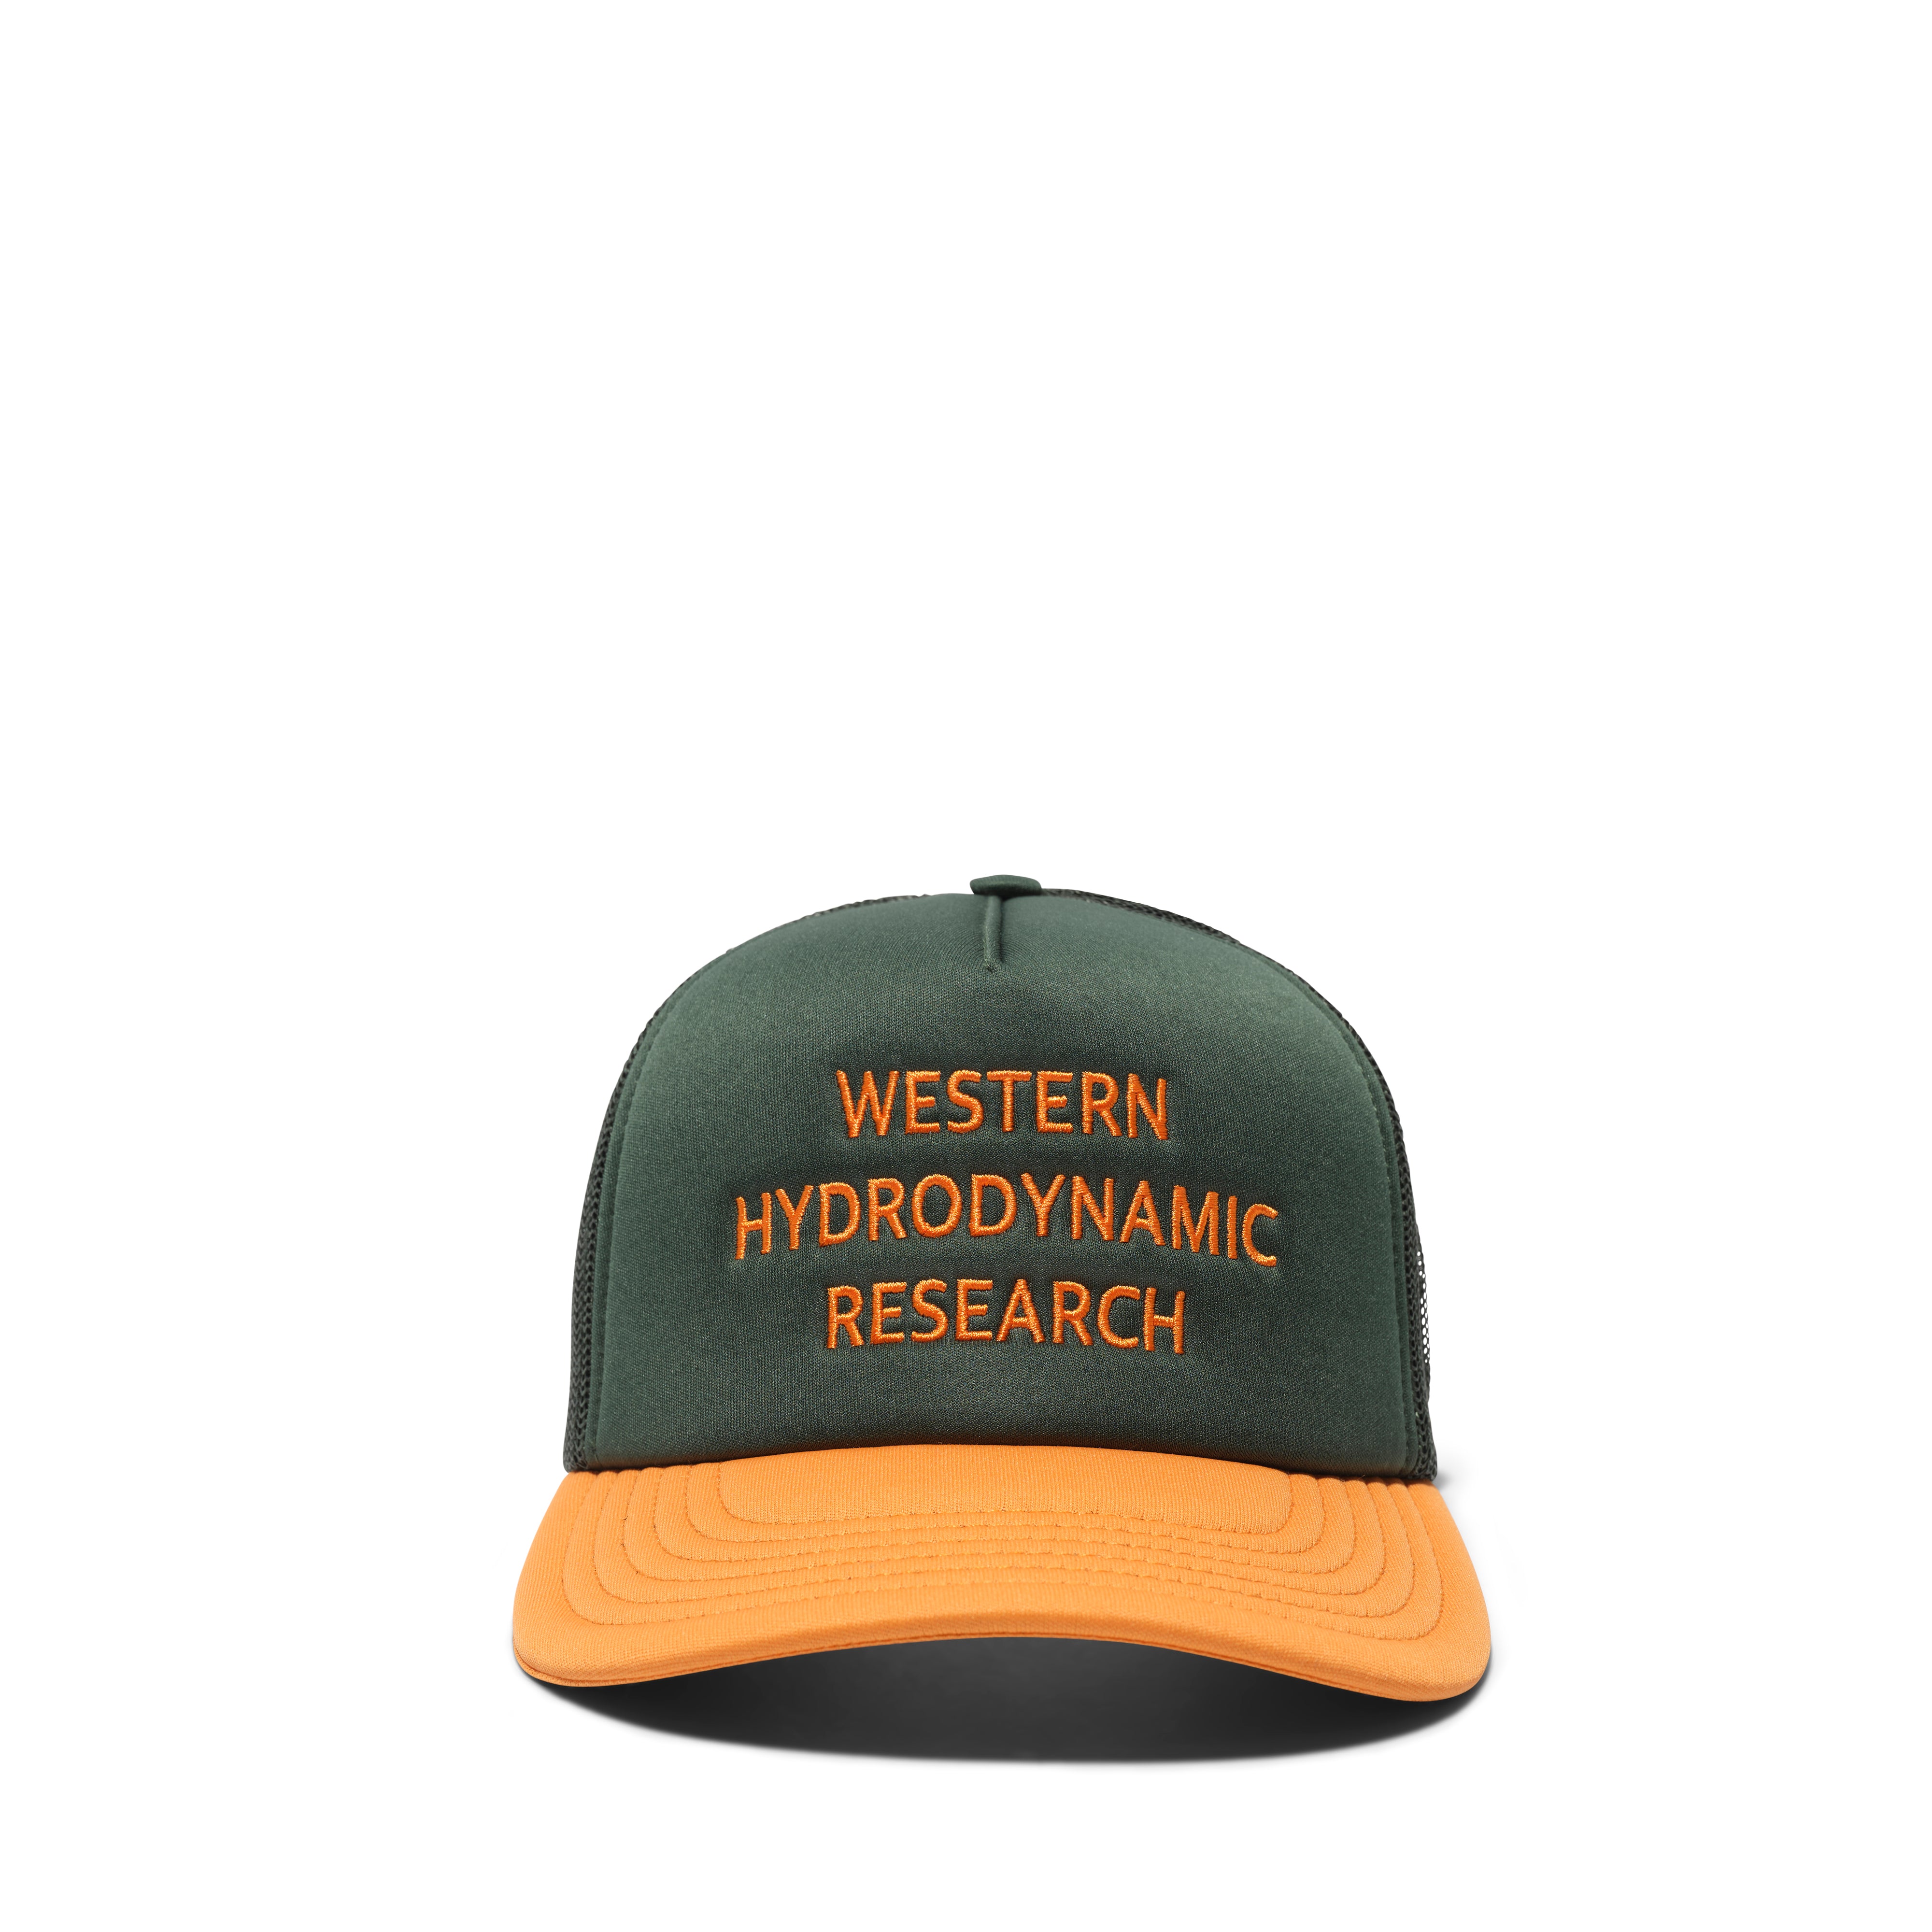 Western Hydrodynamic Research - Men's Otto Promo Hat - (Olive/Orange)